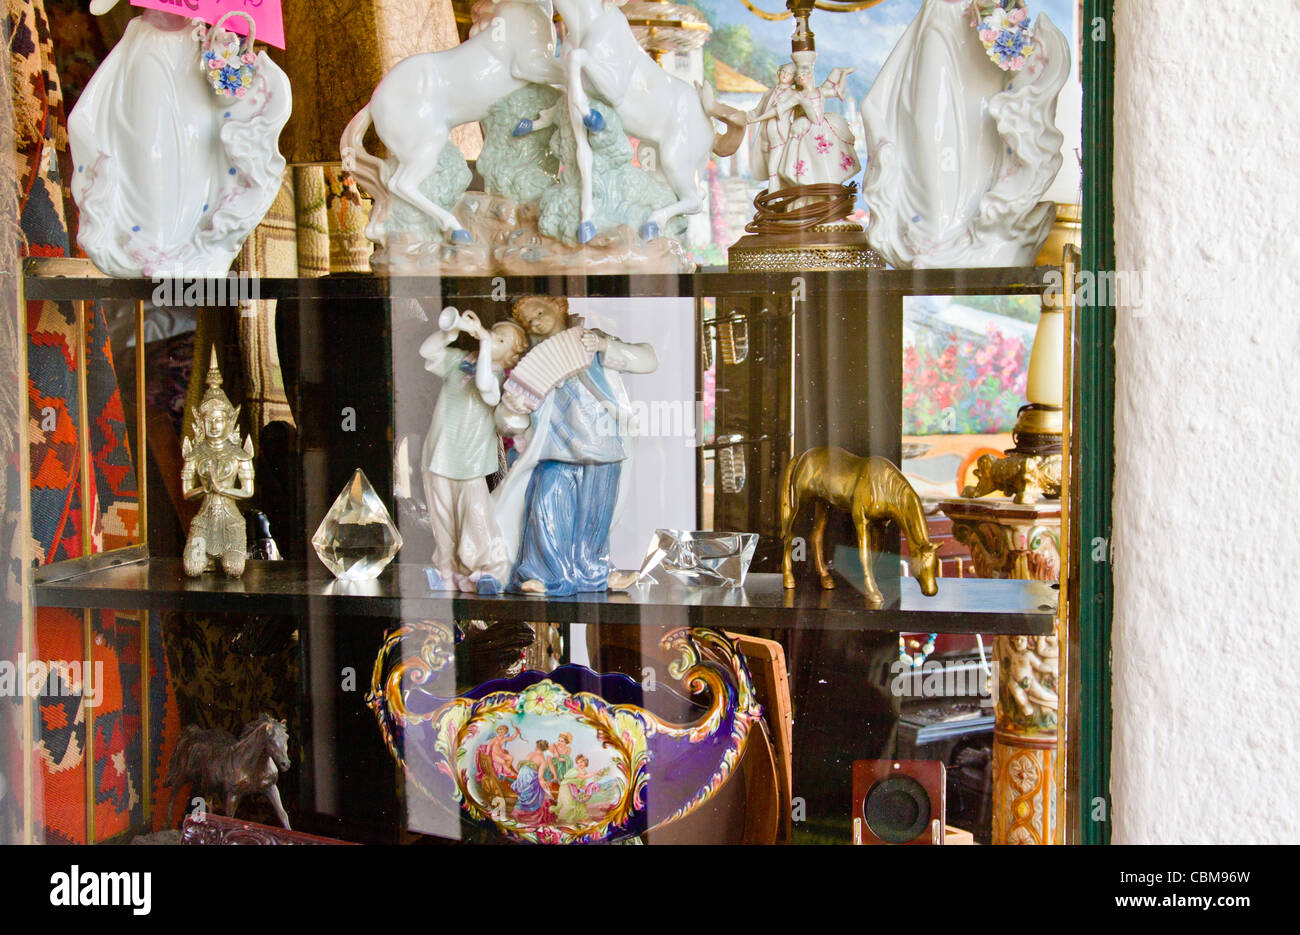 Curios in shop window in 'Santa Barbara', California Stock Photo